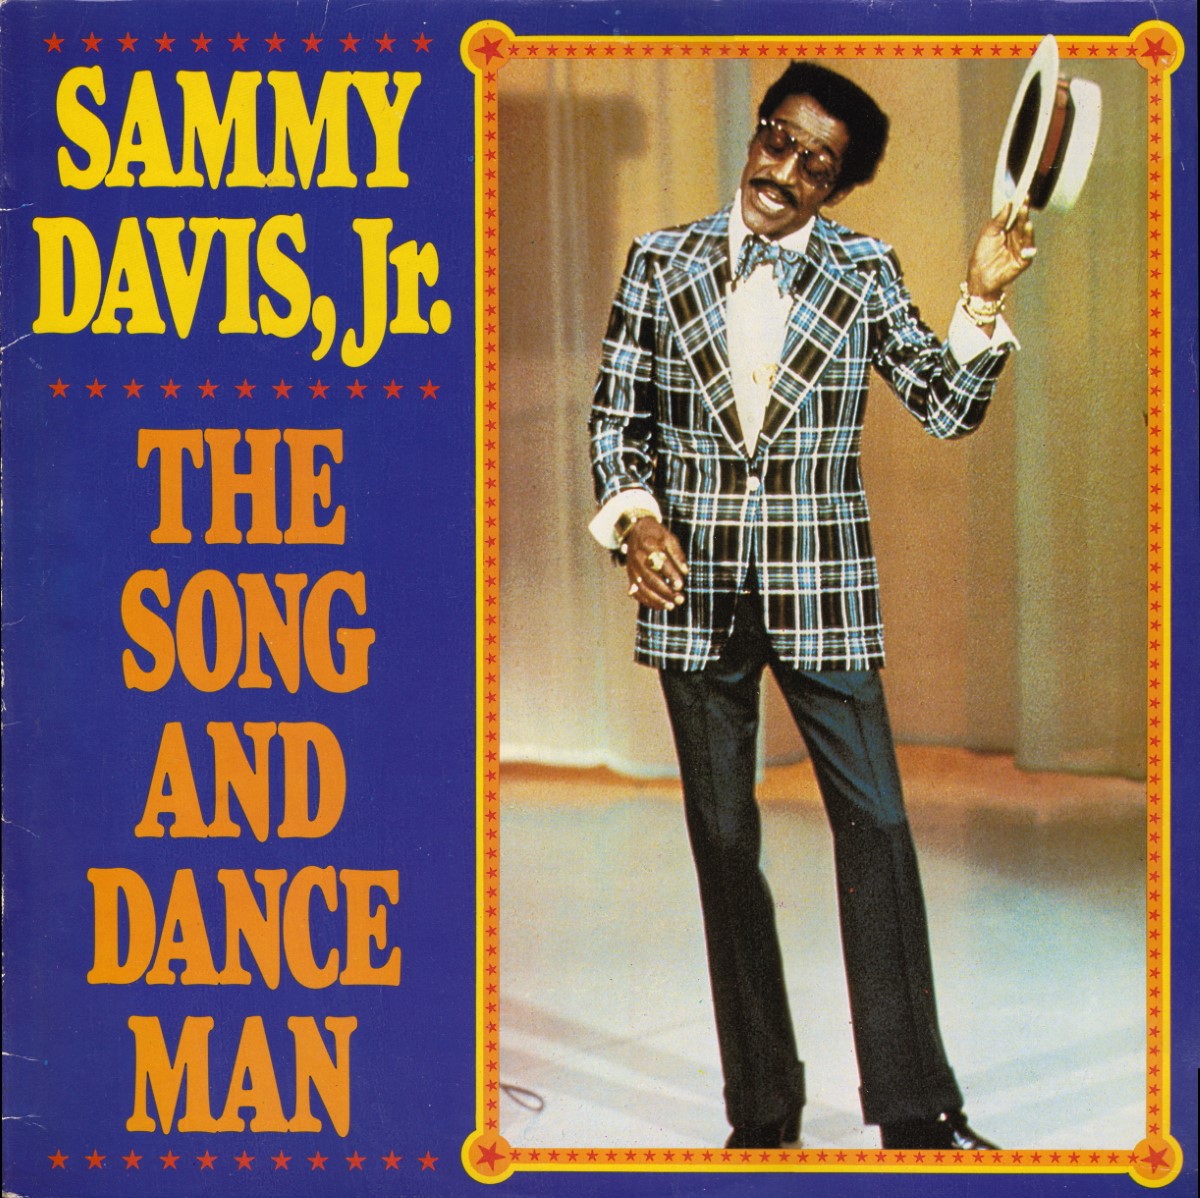 Sammy Davis Jr. - The Song And Dance Man (1976)